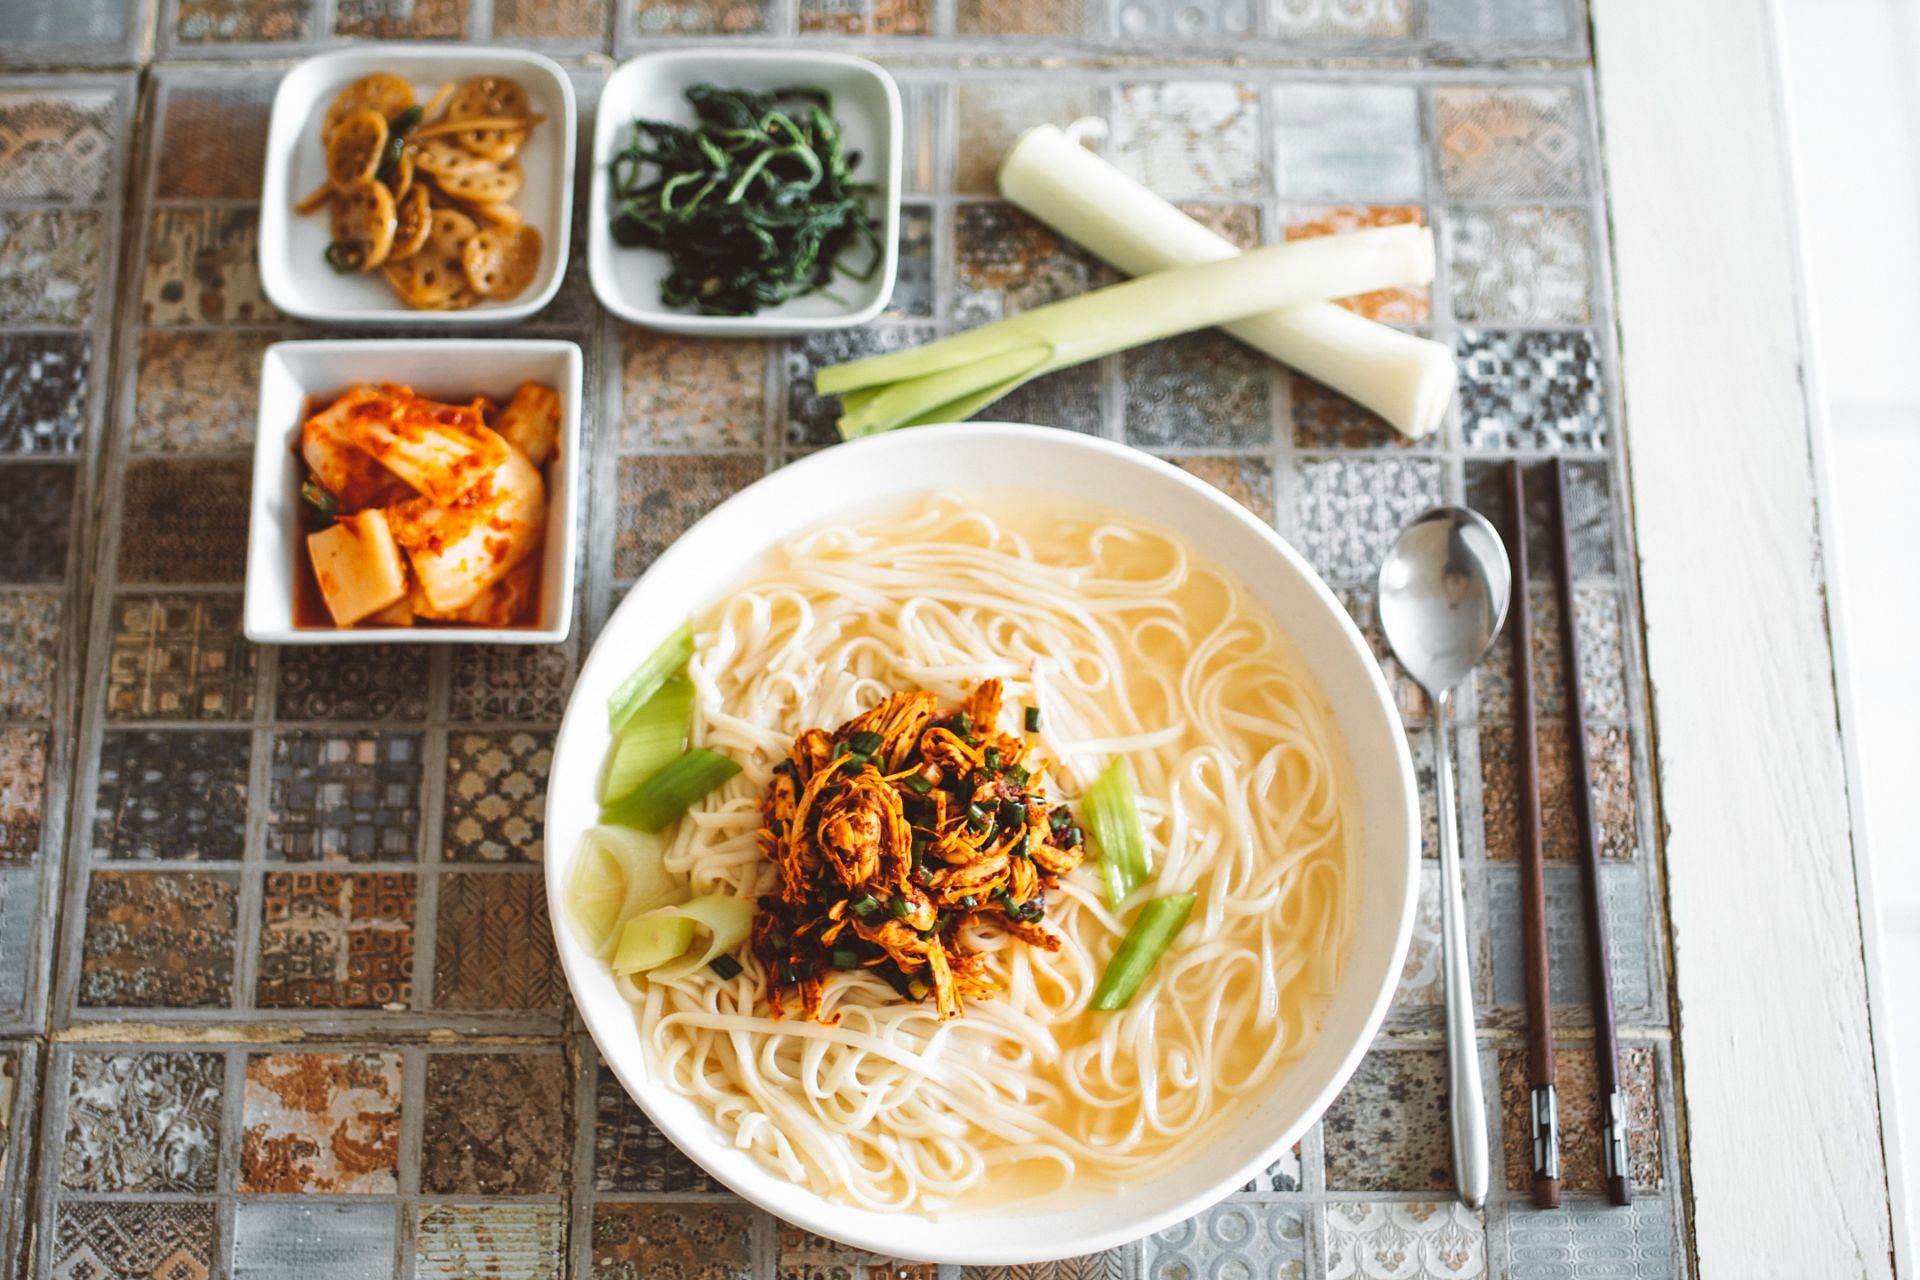 Lotus root is popular in Asian cuisine. (Image via Unsplash/ROMAN ODINTSOV)